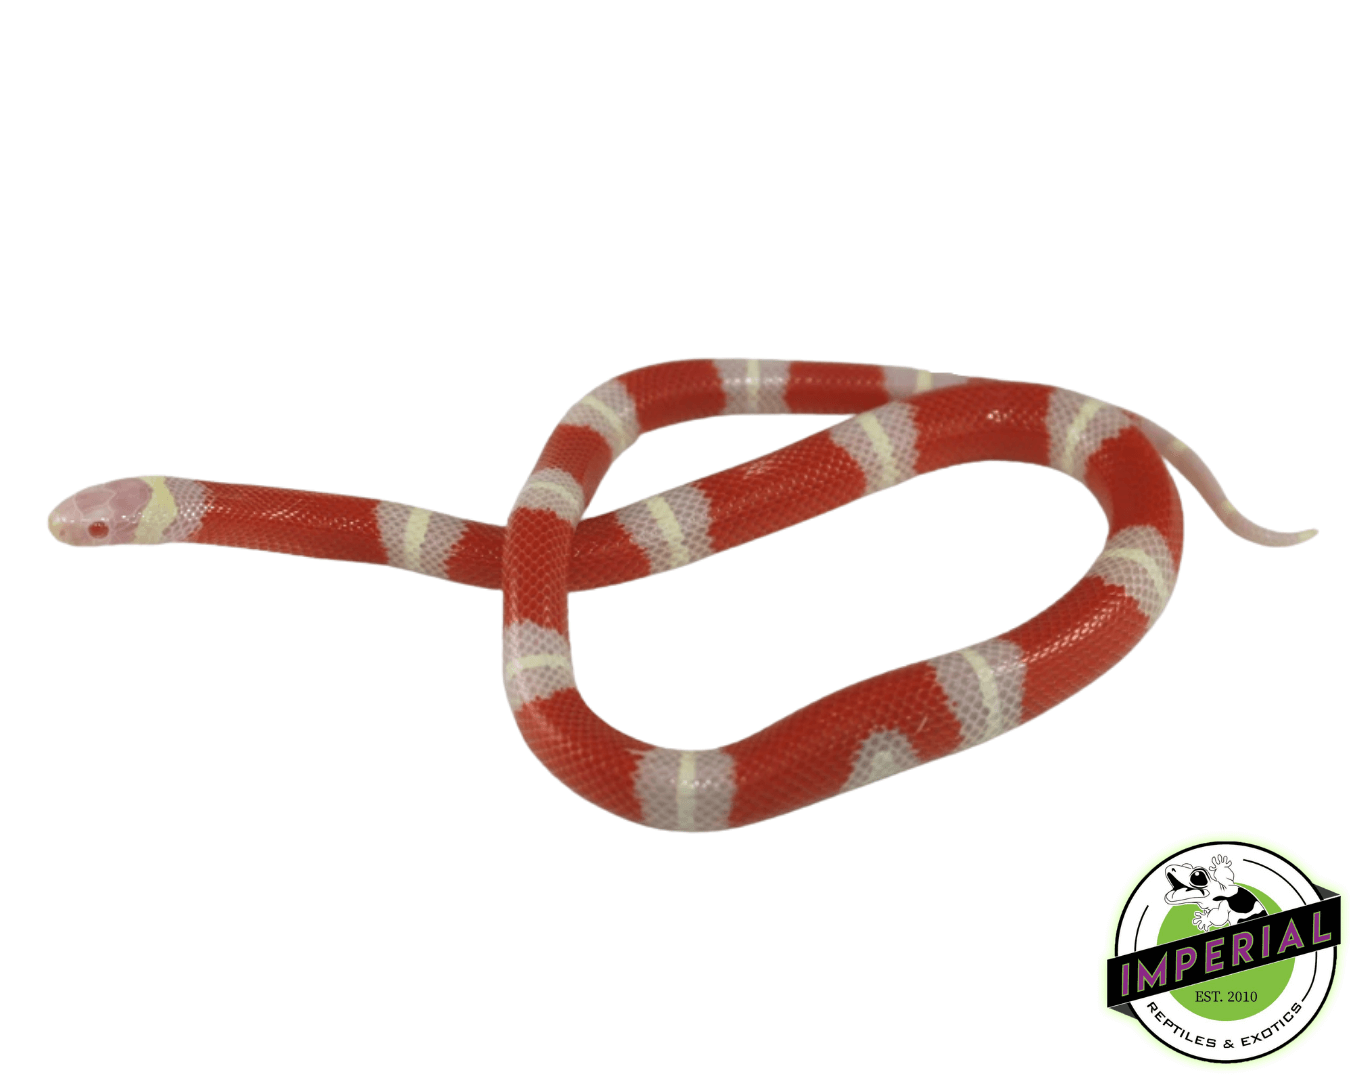 Albino Sinaloan Milk Snake by Imperial Reptiles & Exotics, LLC